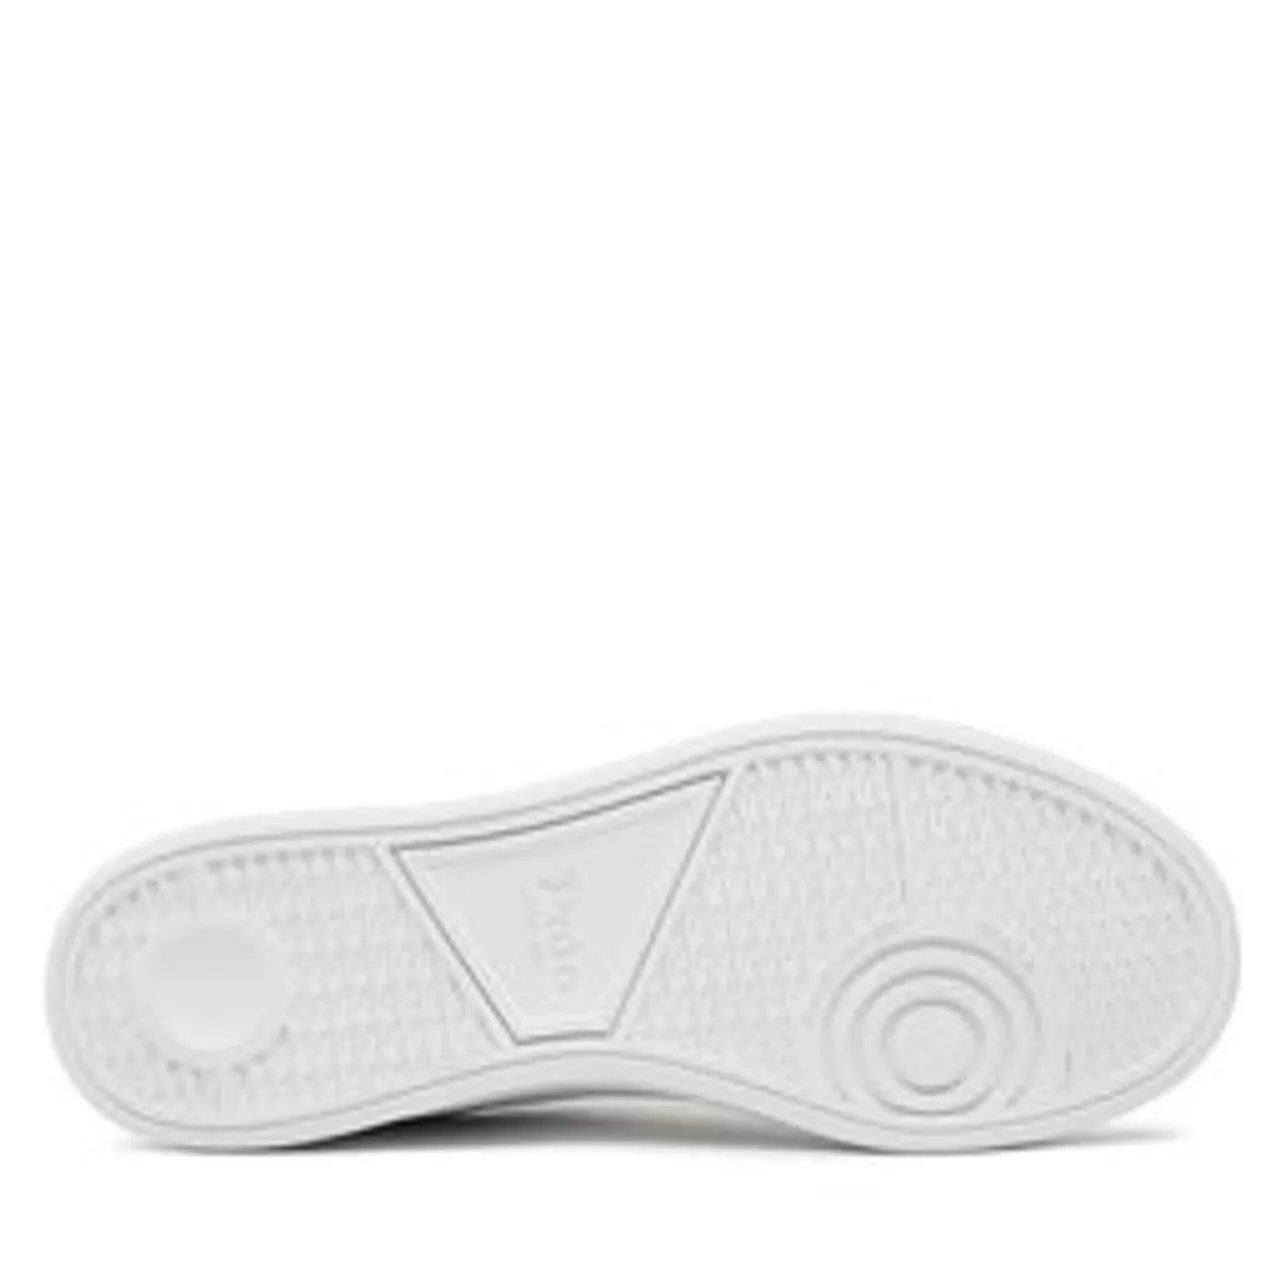 Sneakers Polo Ralph Lauren 809860883006 White 100